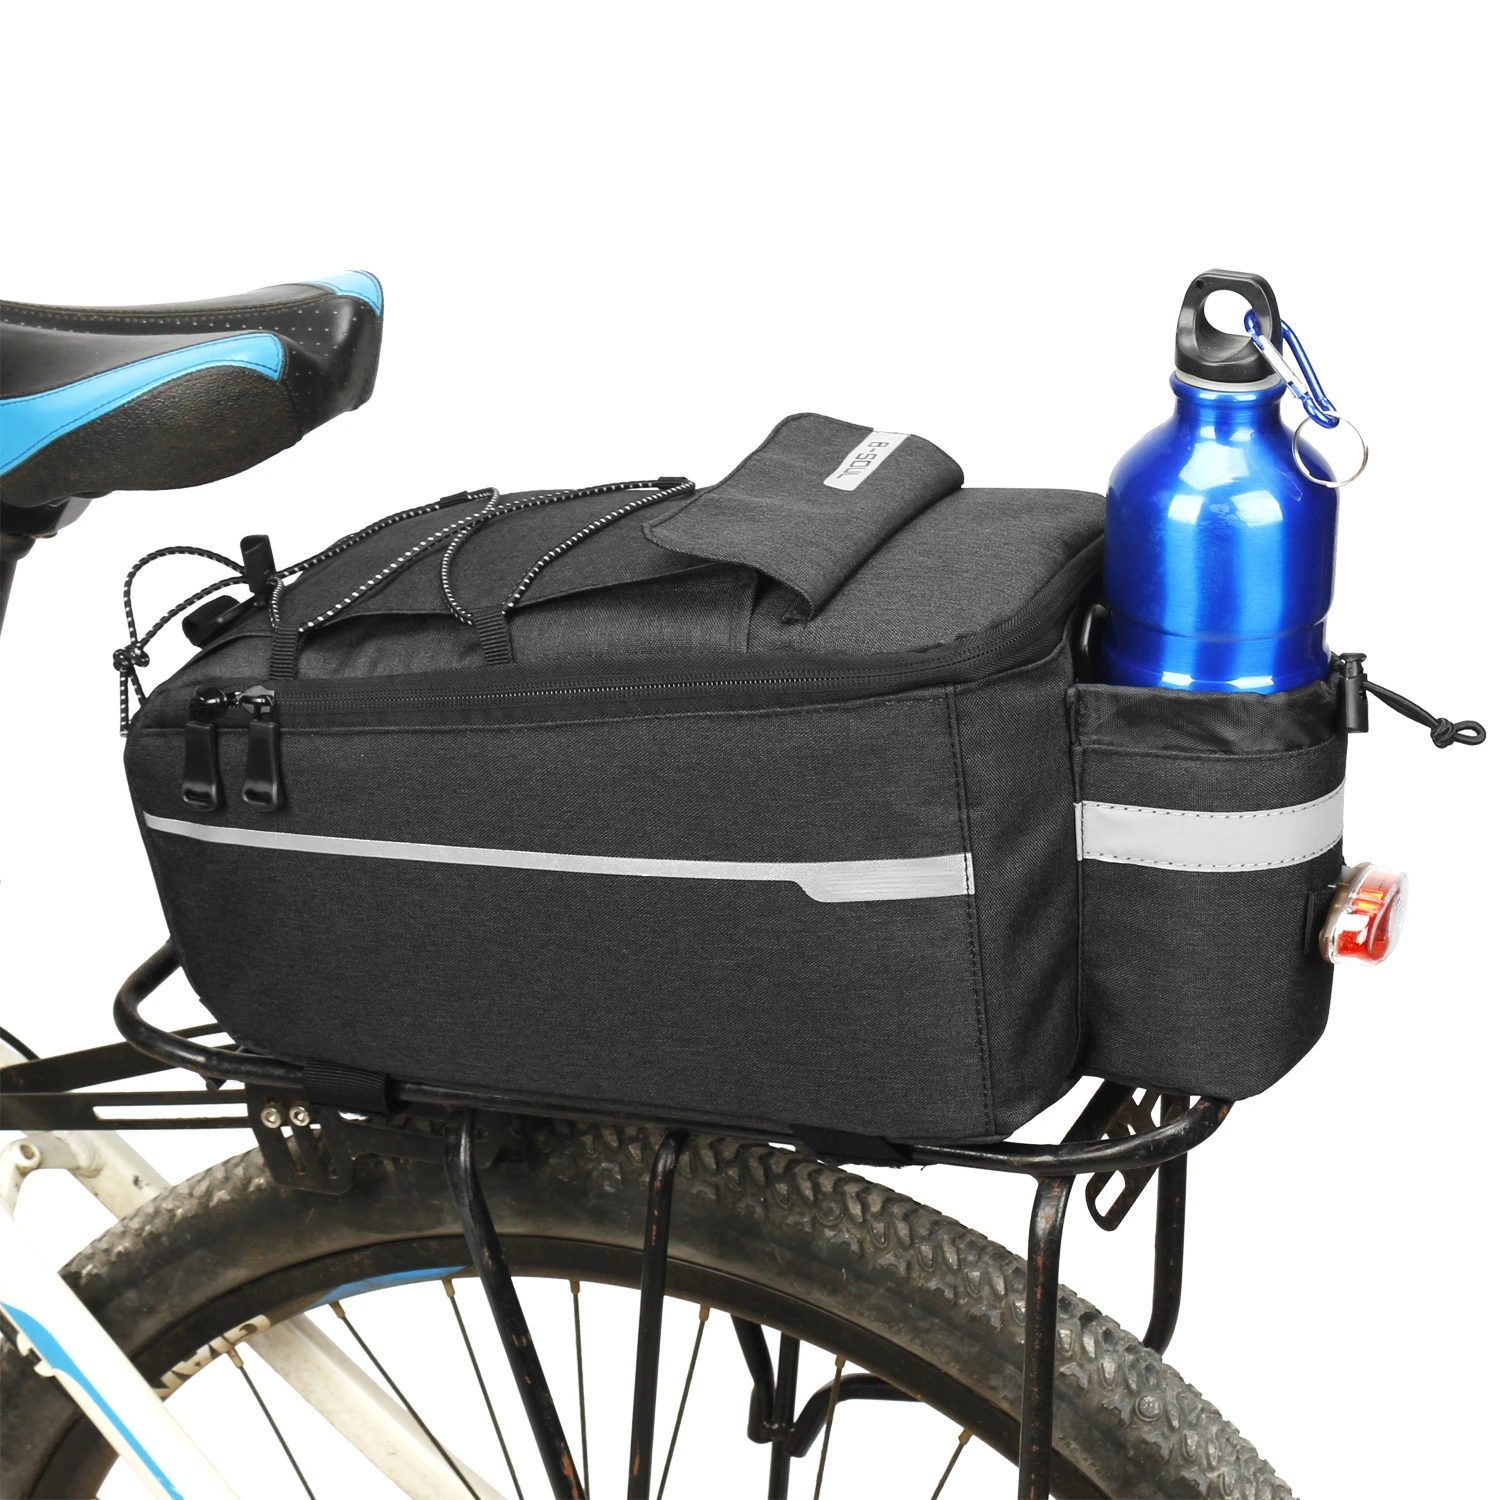 

Lixada Insulated Trunk Cooler Bag Cycling Bicycle Rear Rack Storage Luggage Bag Reflective MTB Bike Pannier Bag Shoulder Bag New